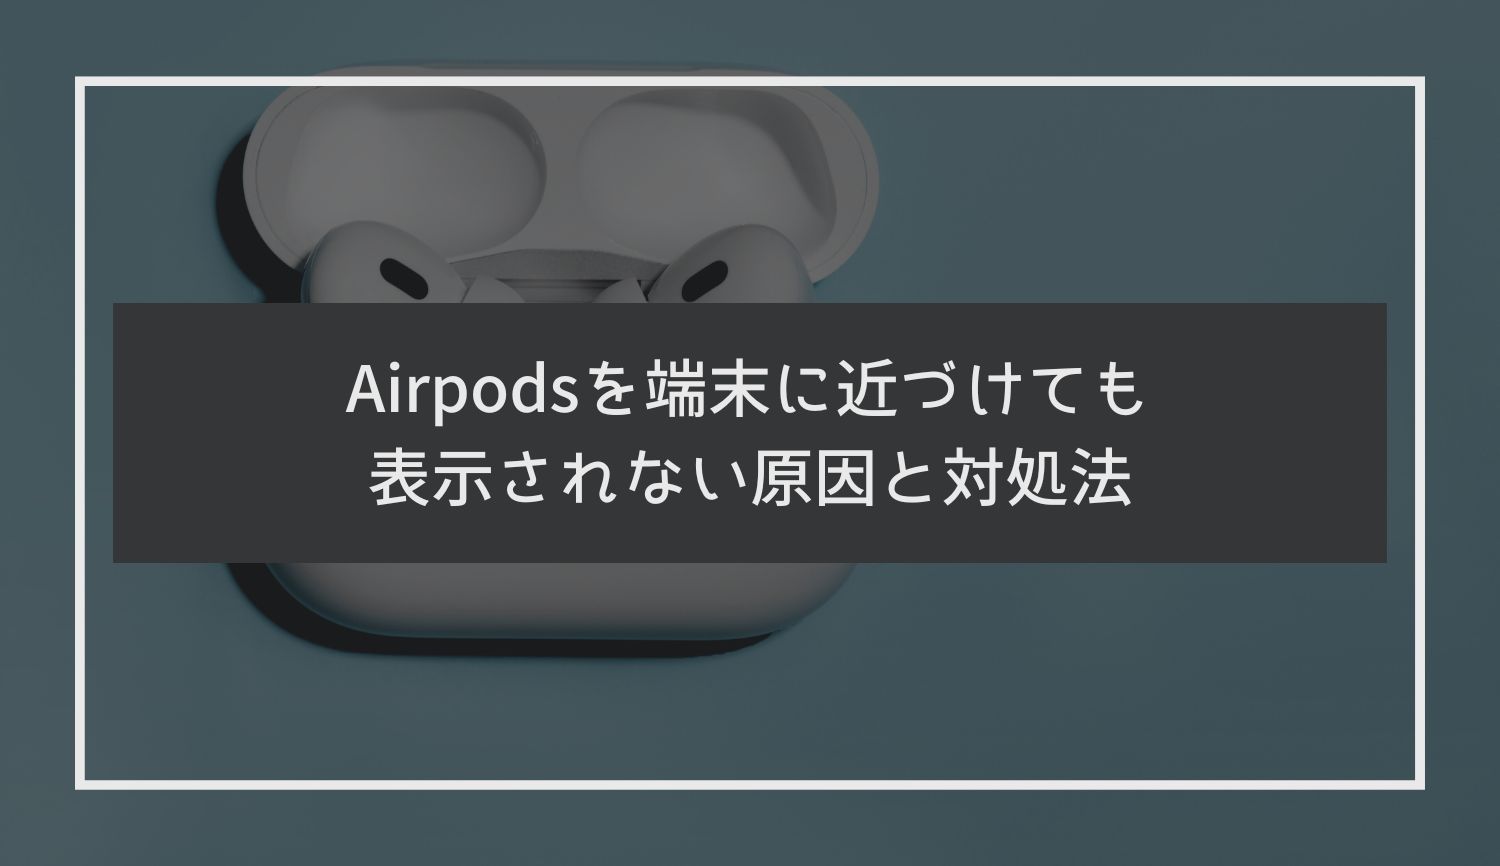 Airpods Proを端末に近づけても表示されない原因と対処法